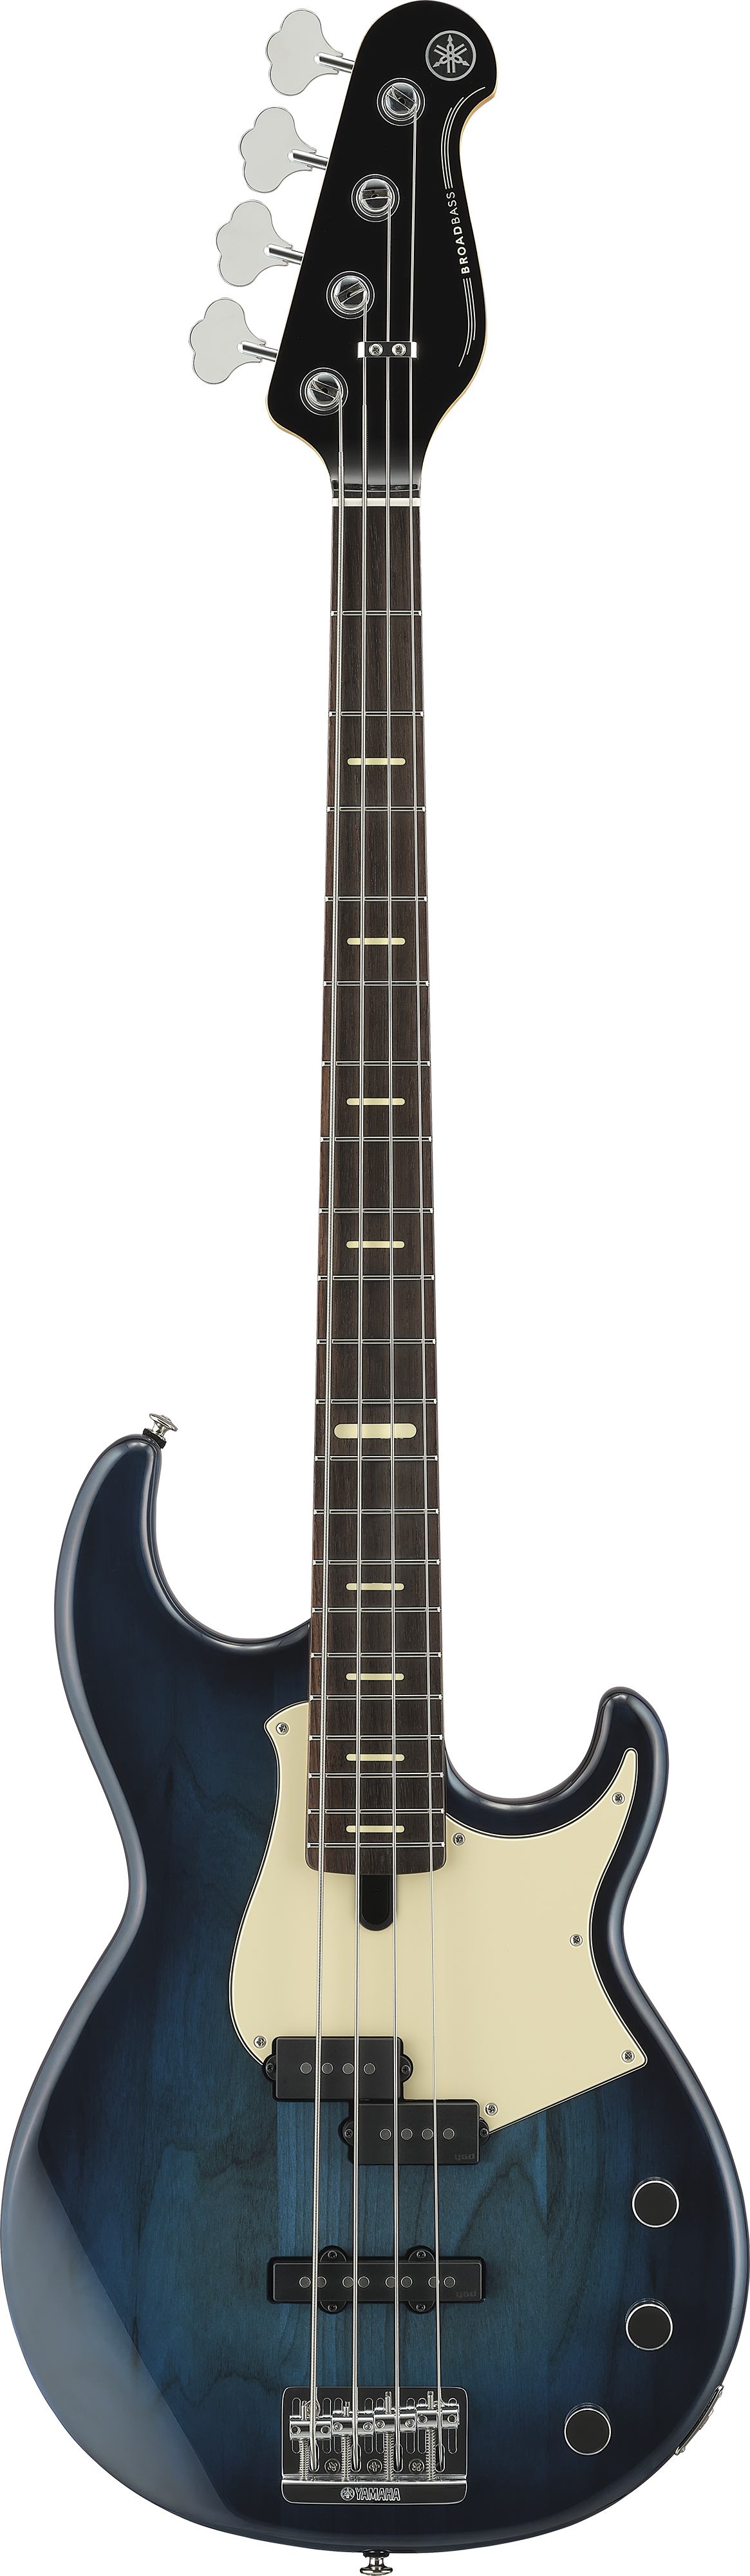 Yamaha BBP34II Electric Bass Guitar w/Hard Case - Made In Japan